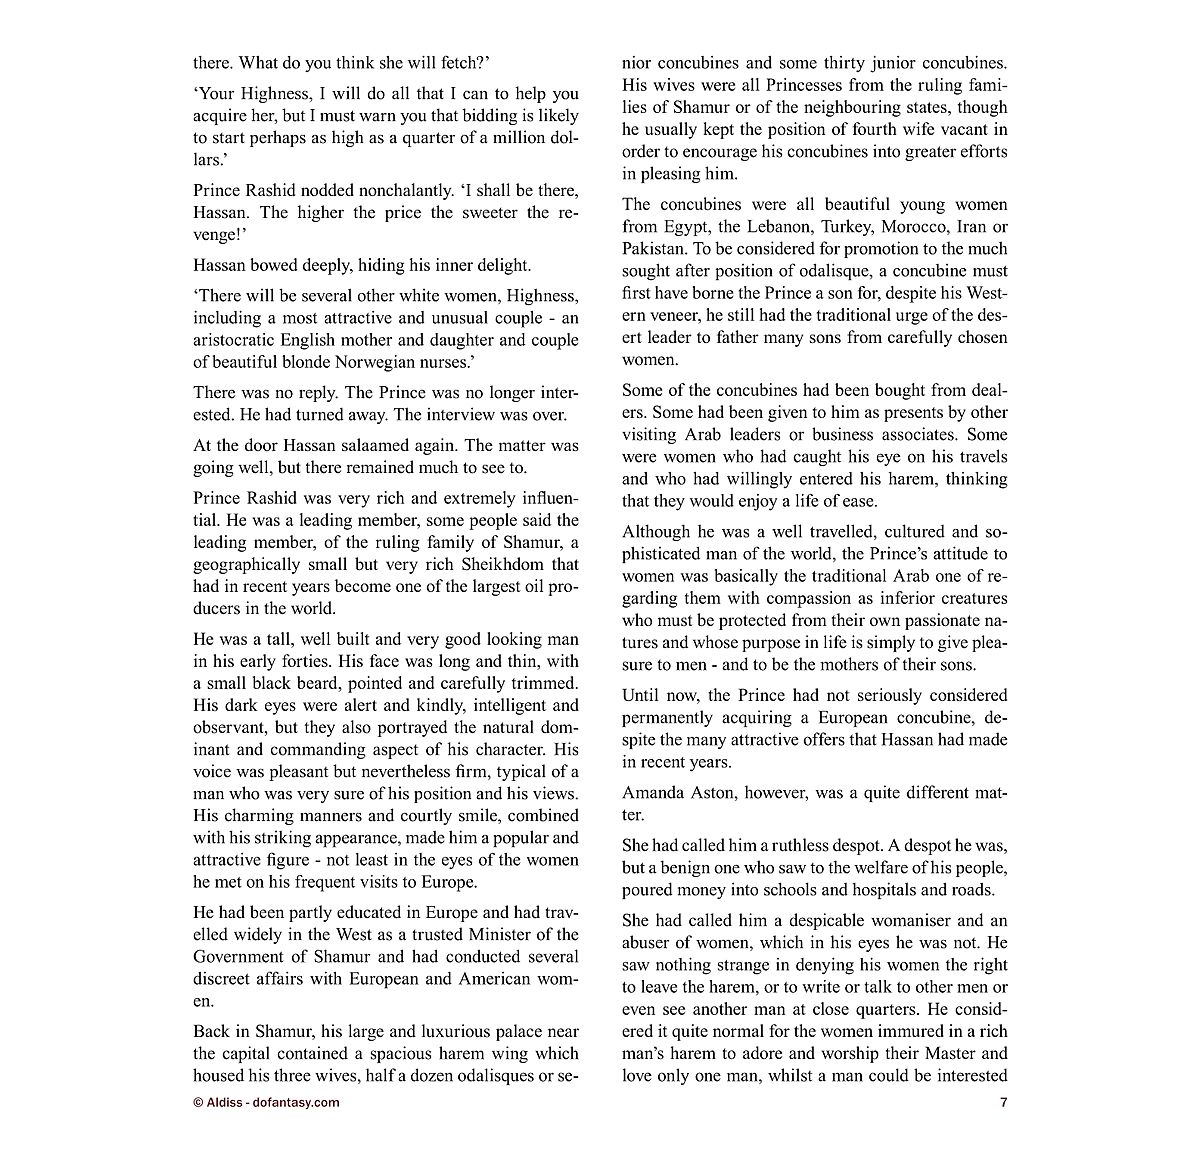 Cagri- Arabian Revenge 1 page 1